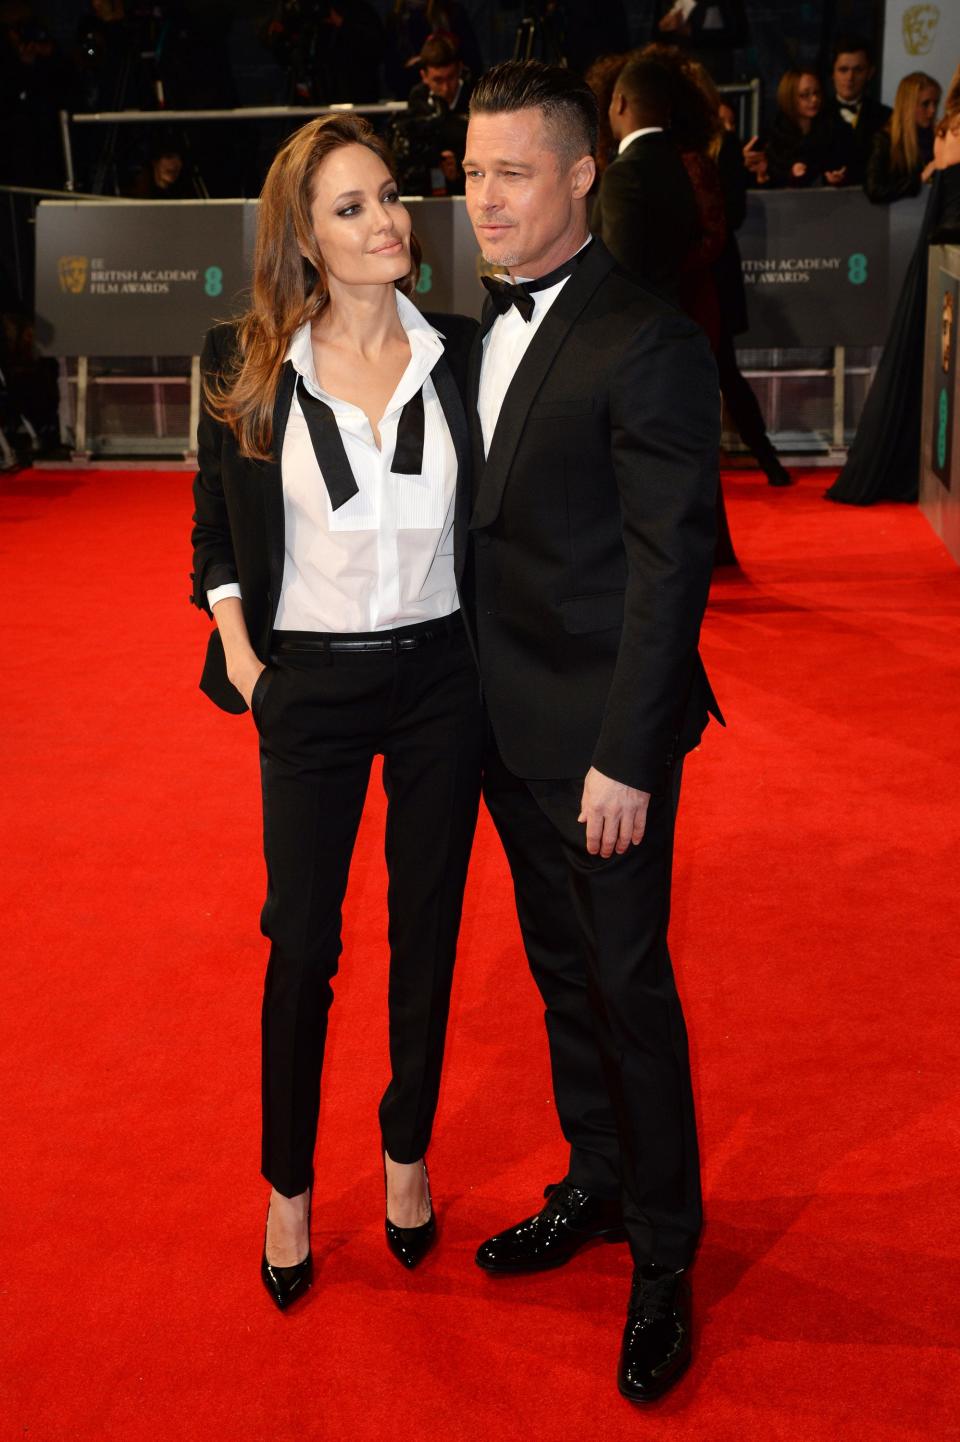 Brad Pitt and Angelina Jolie wearing matching suits.